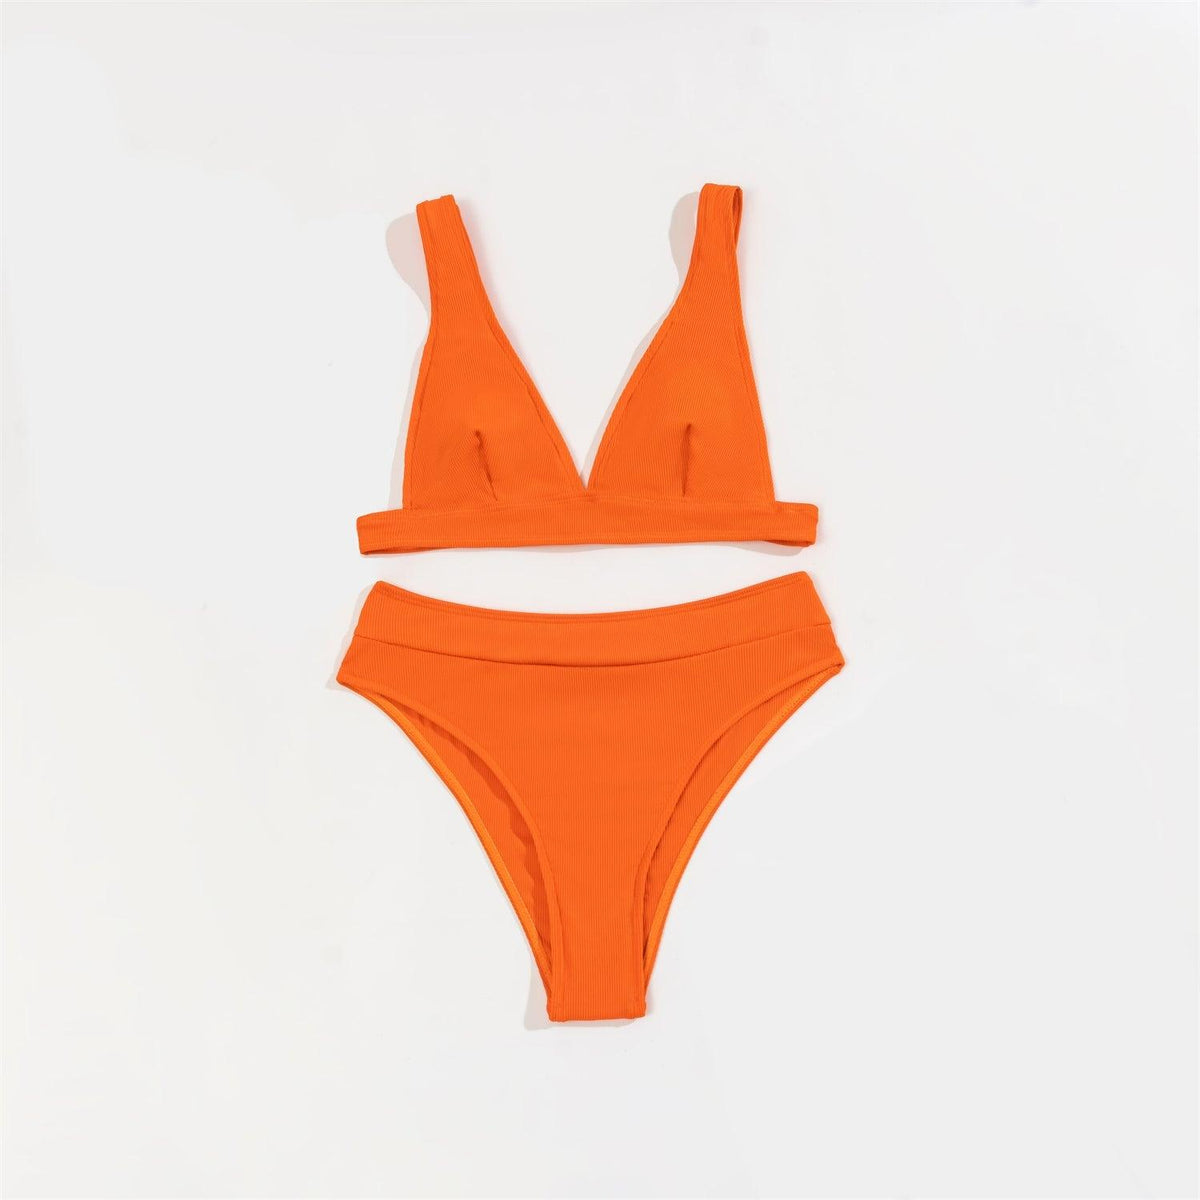 Women's GFIT High Waisted Bikini Set - Sporty Swimwear for Beach - GFIT SPORTS